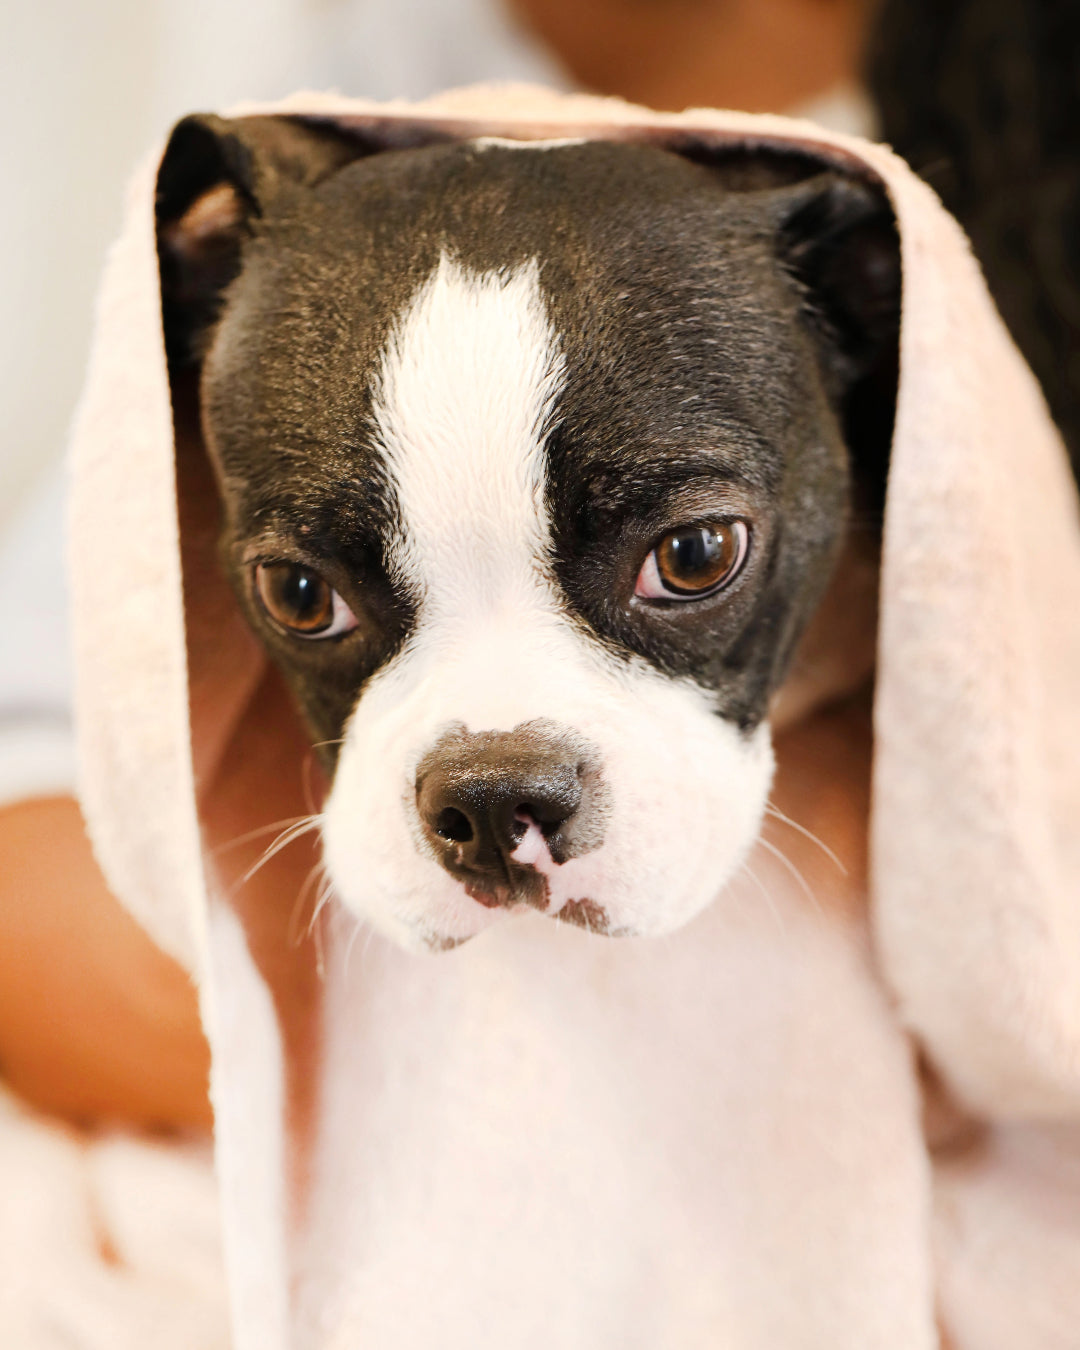 Dog in towel after bath